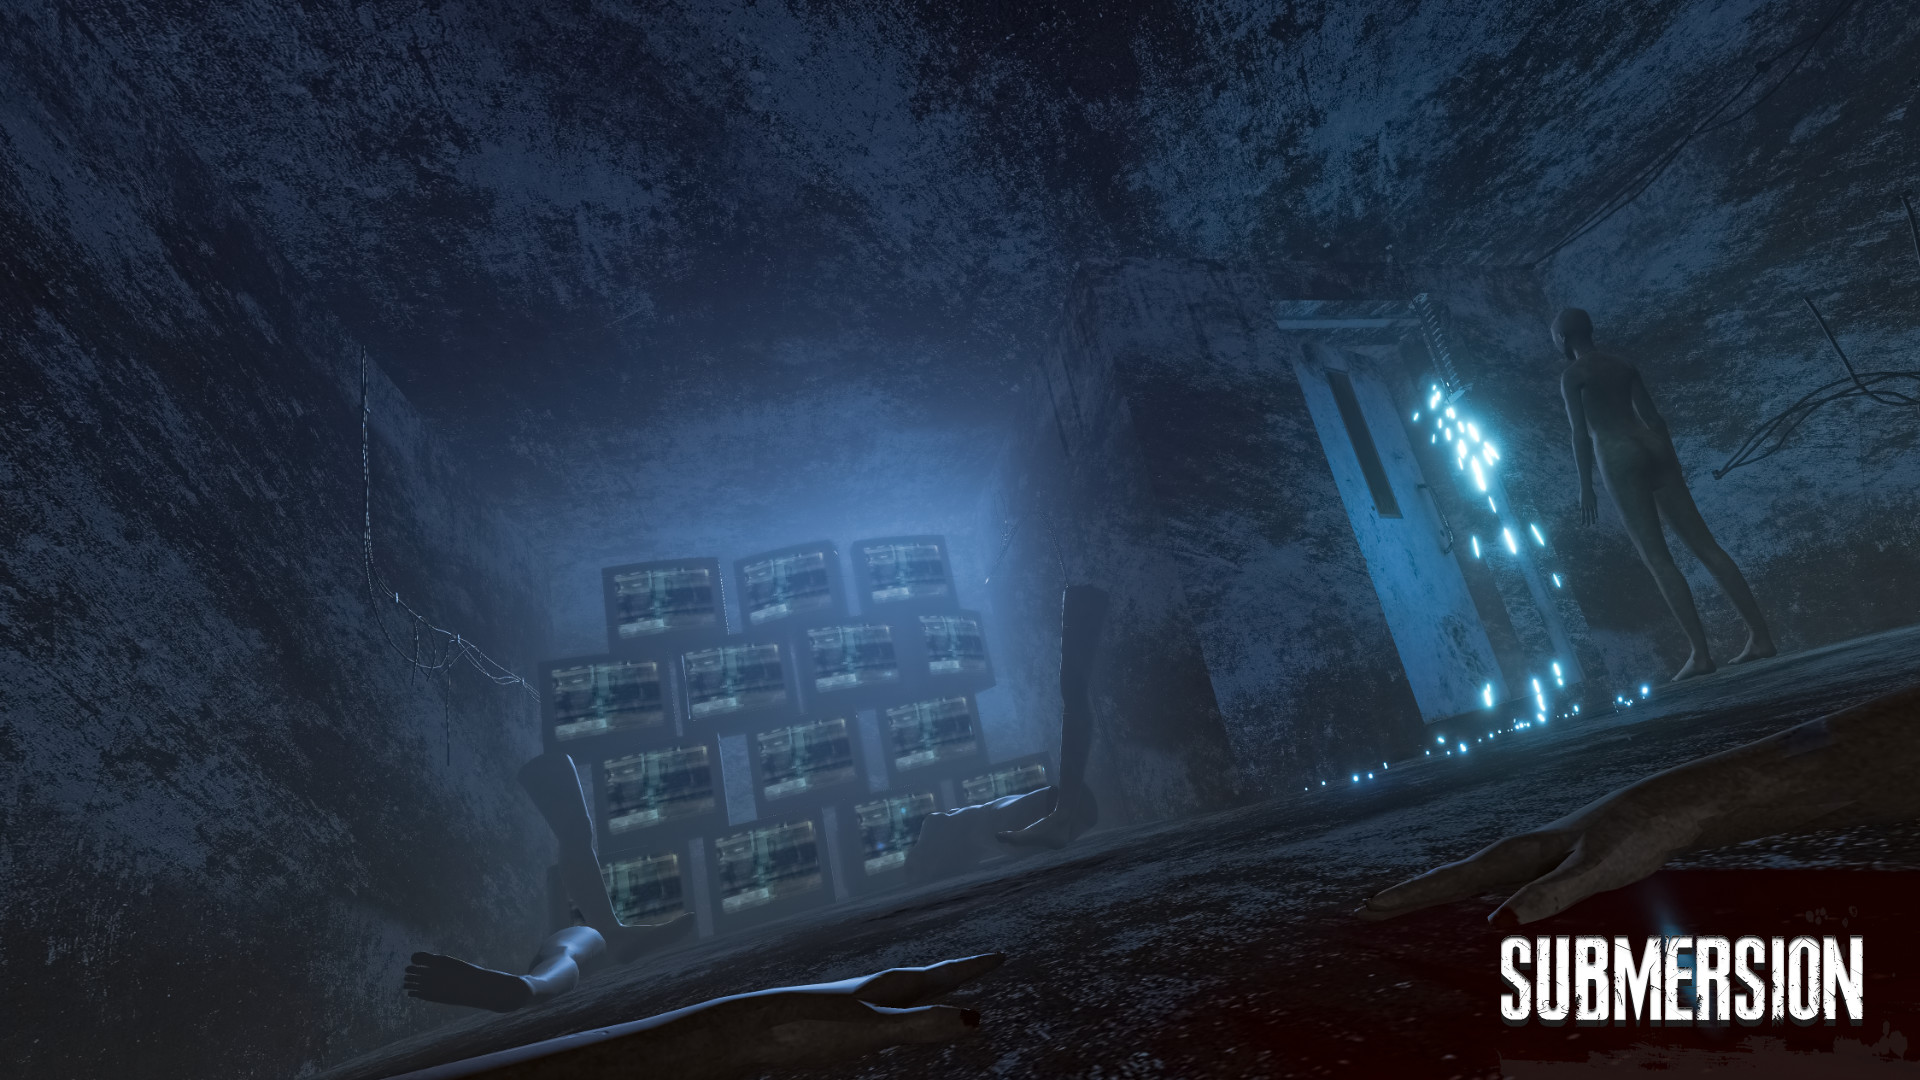 Midnight: Submersion - Nightmare Horror Story Steam CD Key